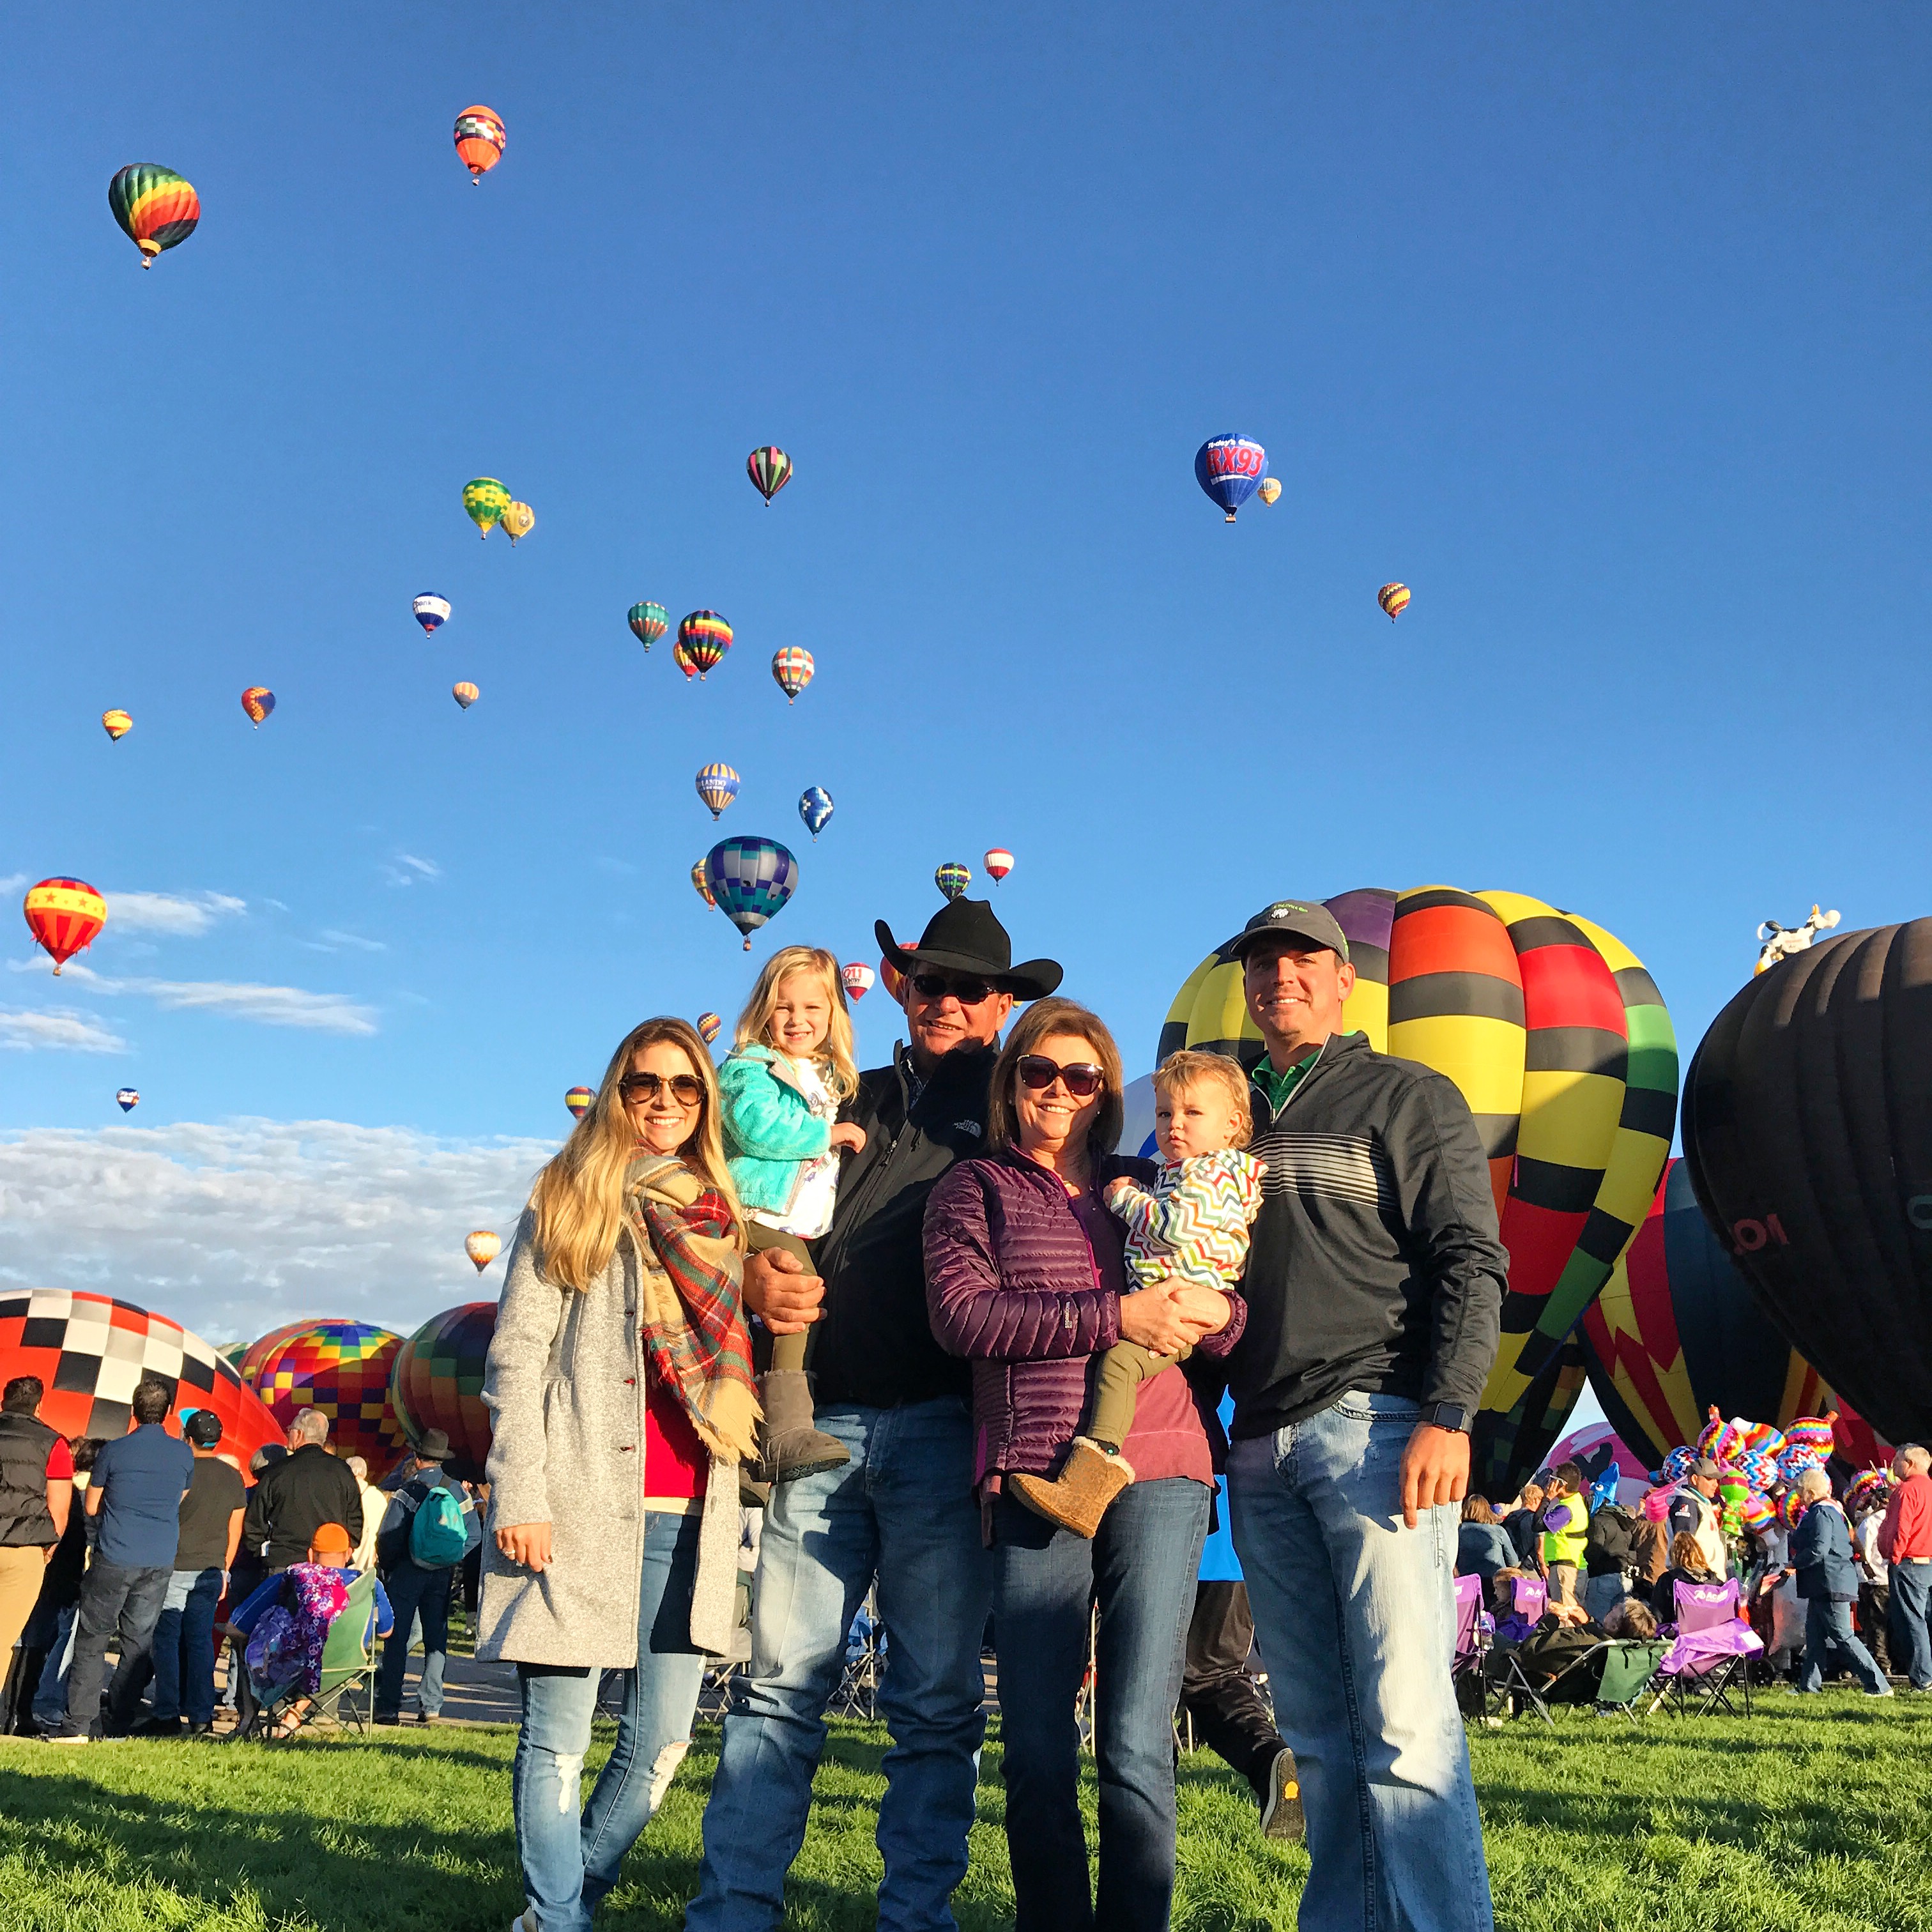 Tips for Traveling to the Albuquerque Balloon Fiesta